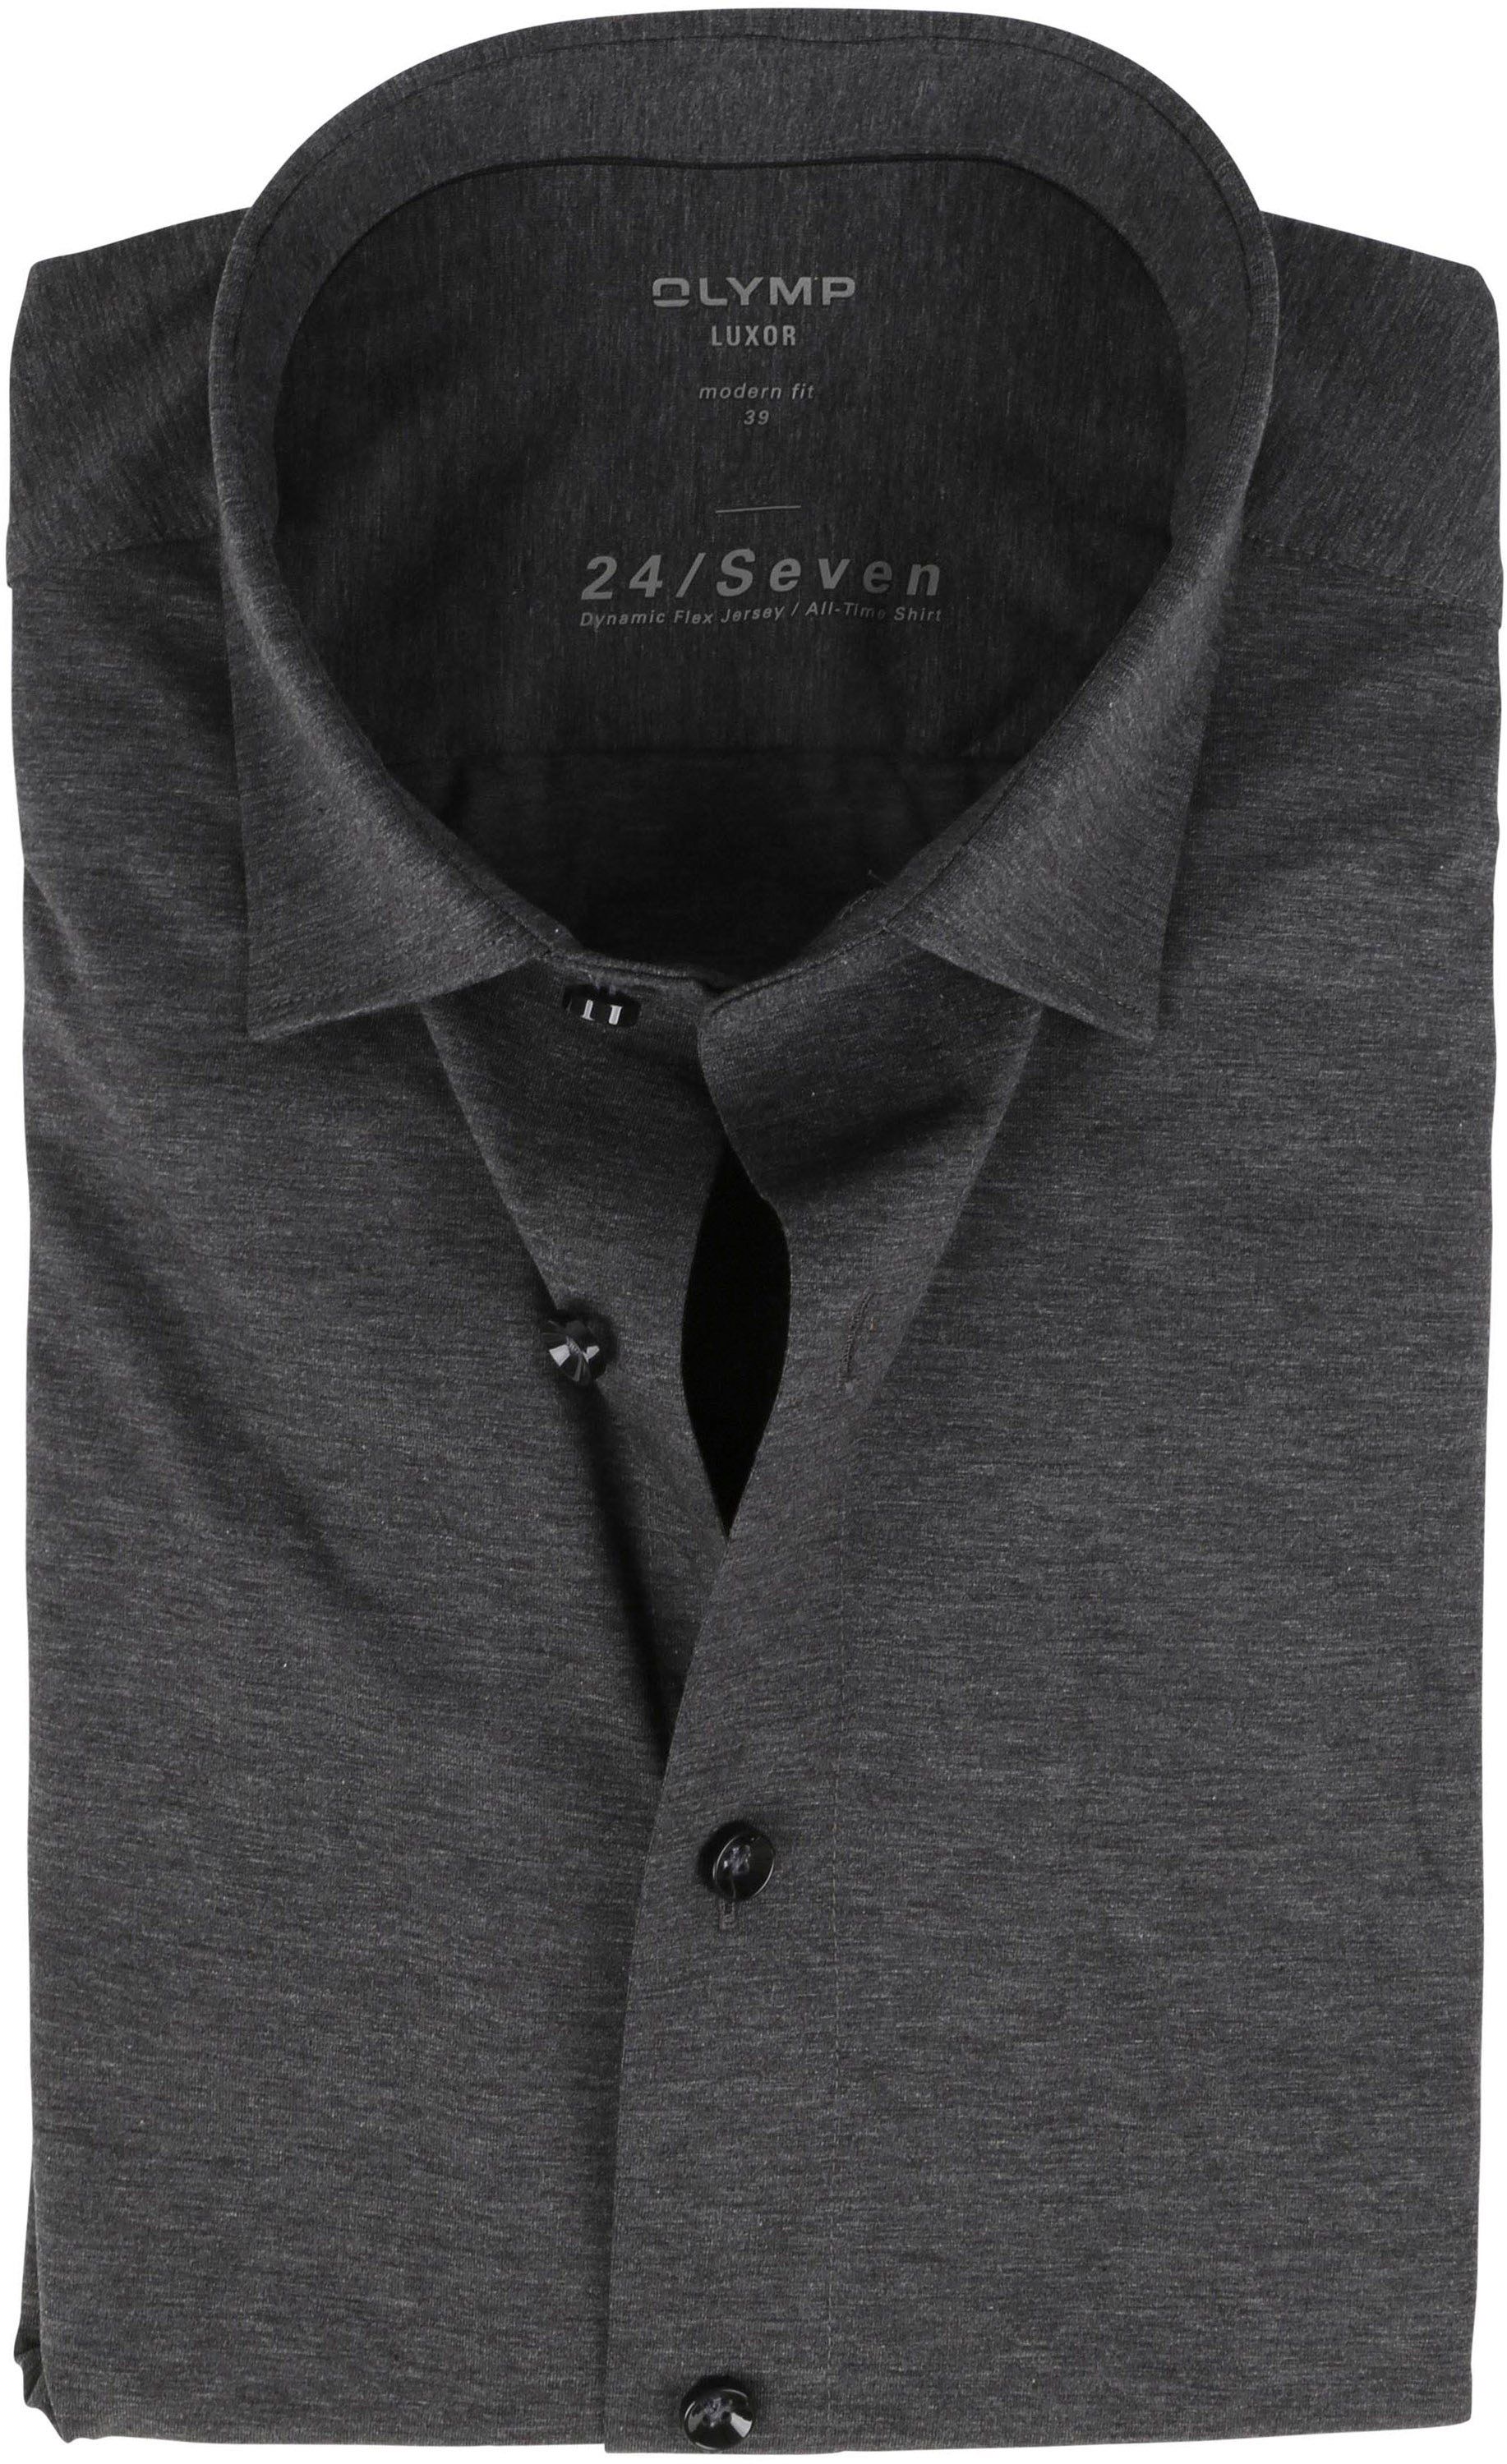 OLYMP Luxor Modern Fit Shirt 24/Seven Dark Dark Grey Grey size 15